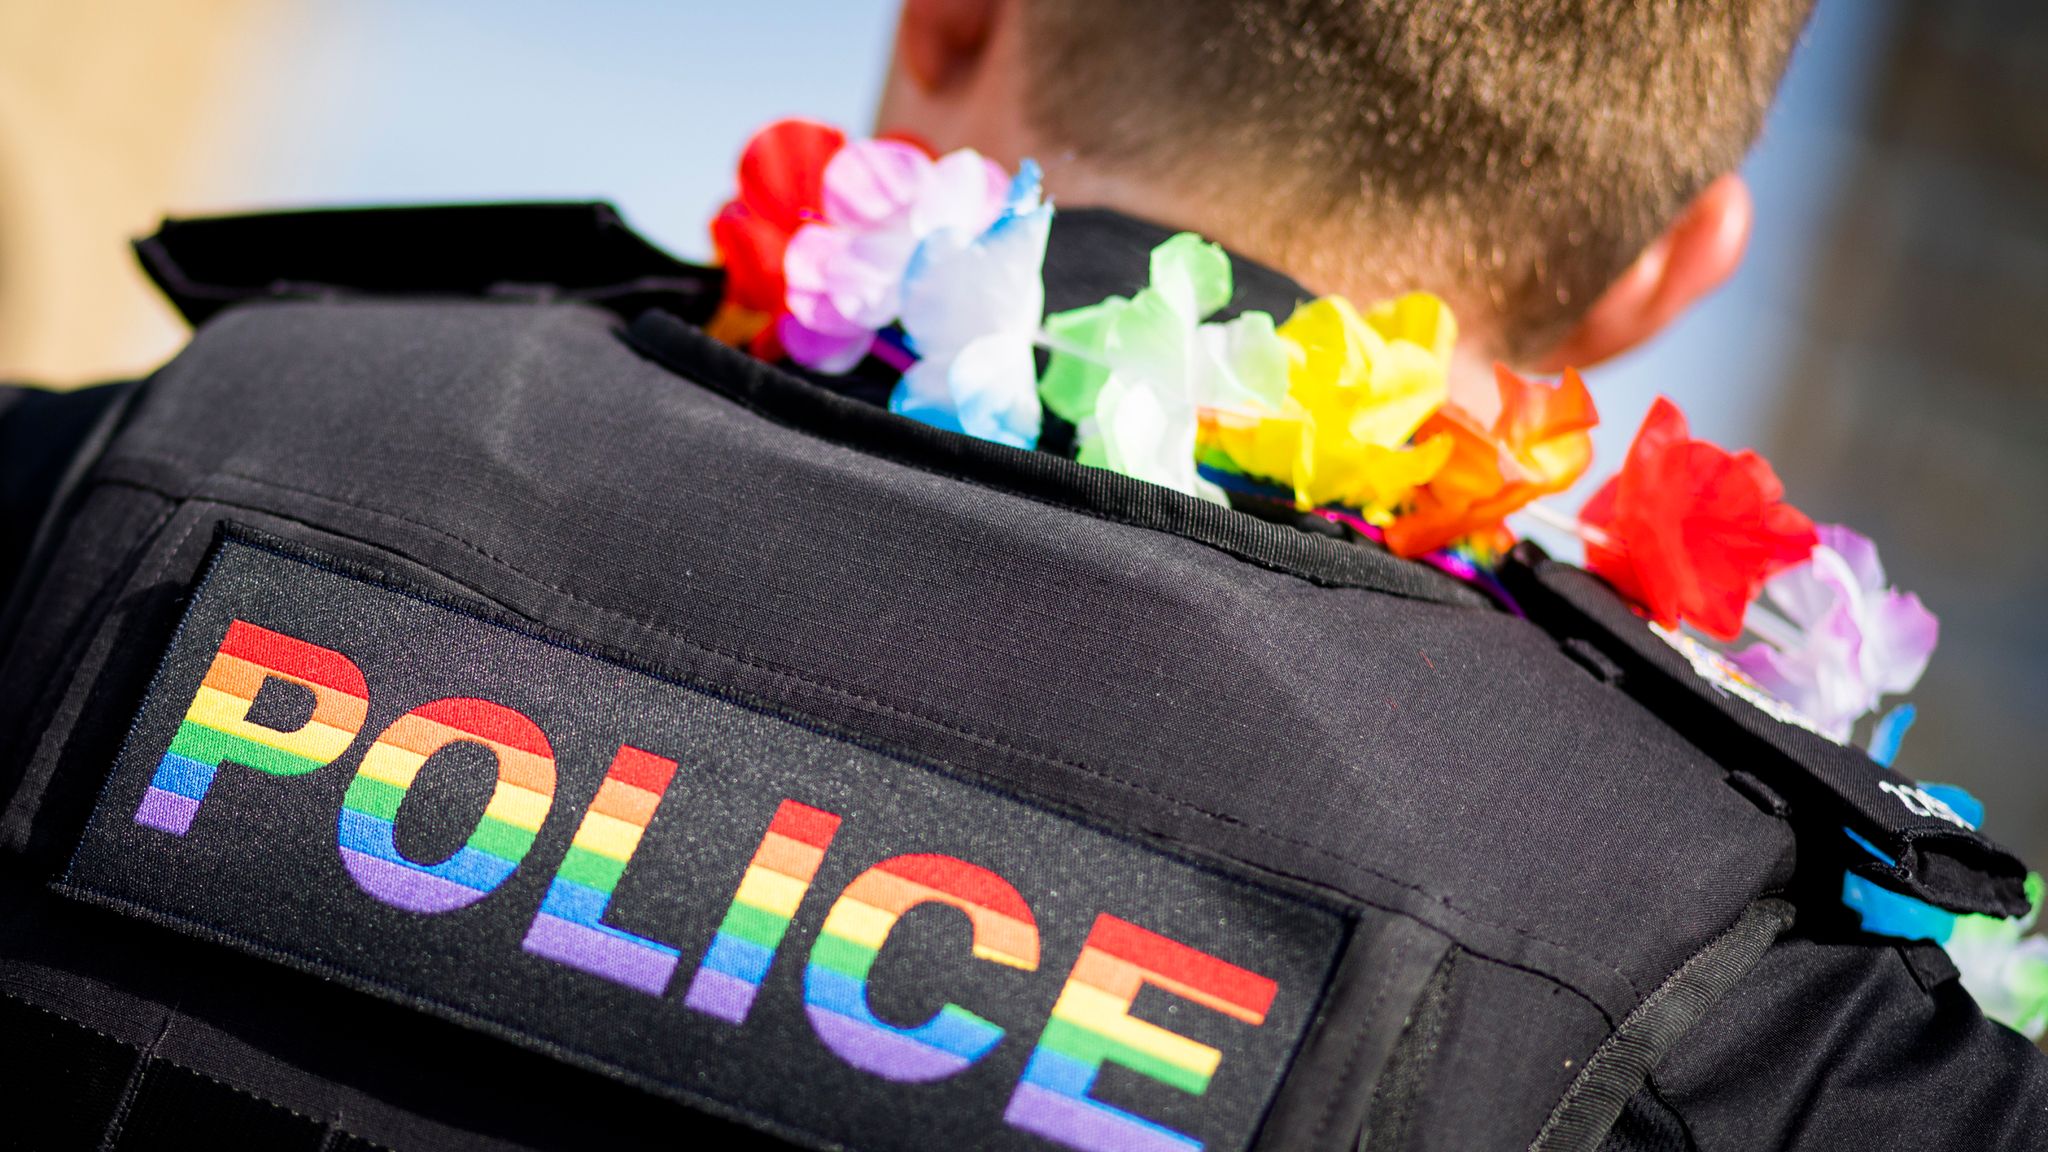 Brighton Pride 2018 Thousands attend LGBTQ parade UK News Sky News